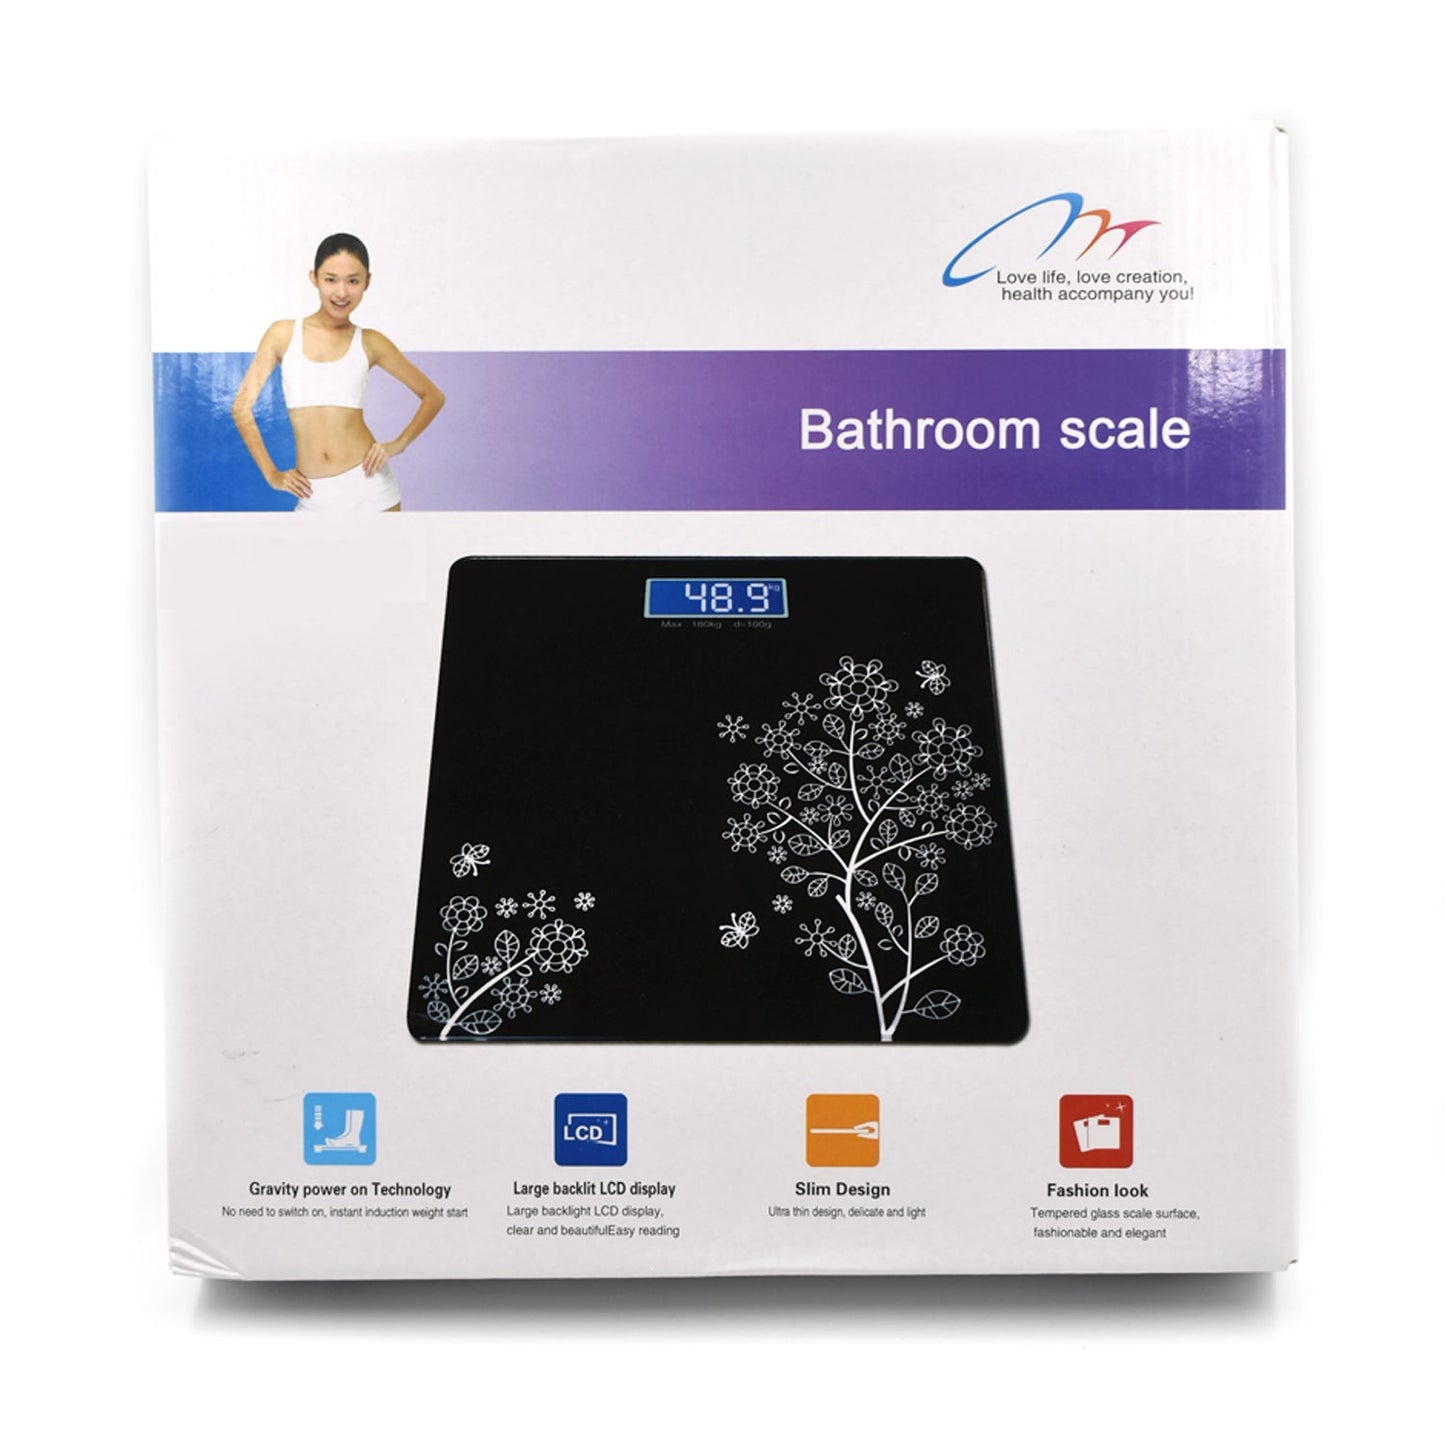 6122 Premium Bathroom Scale used for bathroom purposes in various sectors.